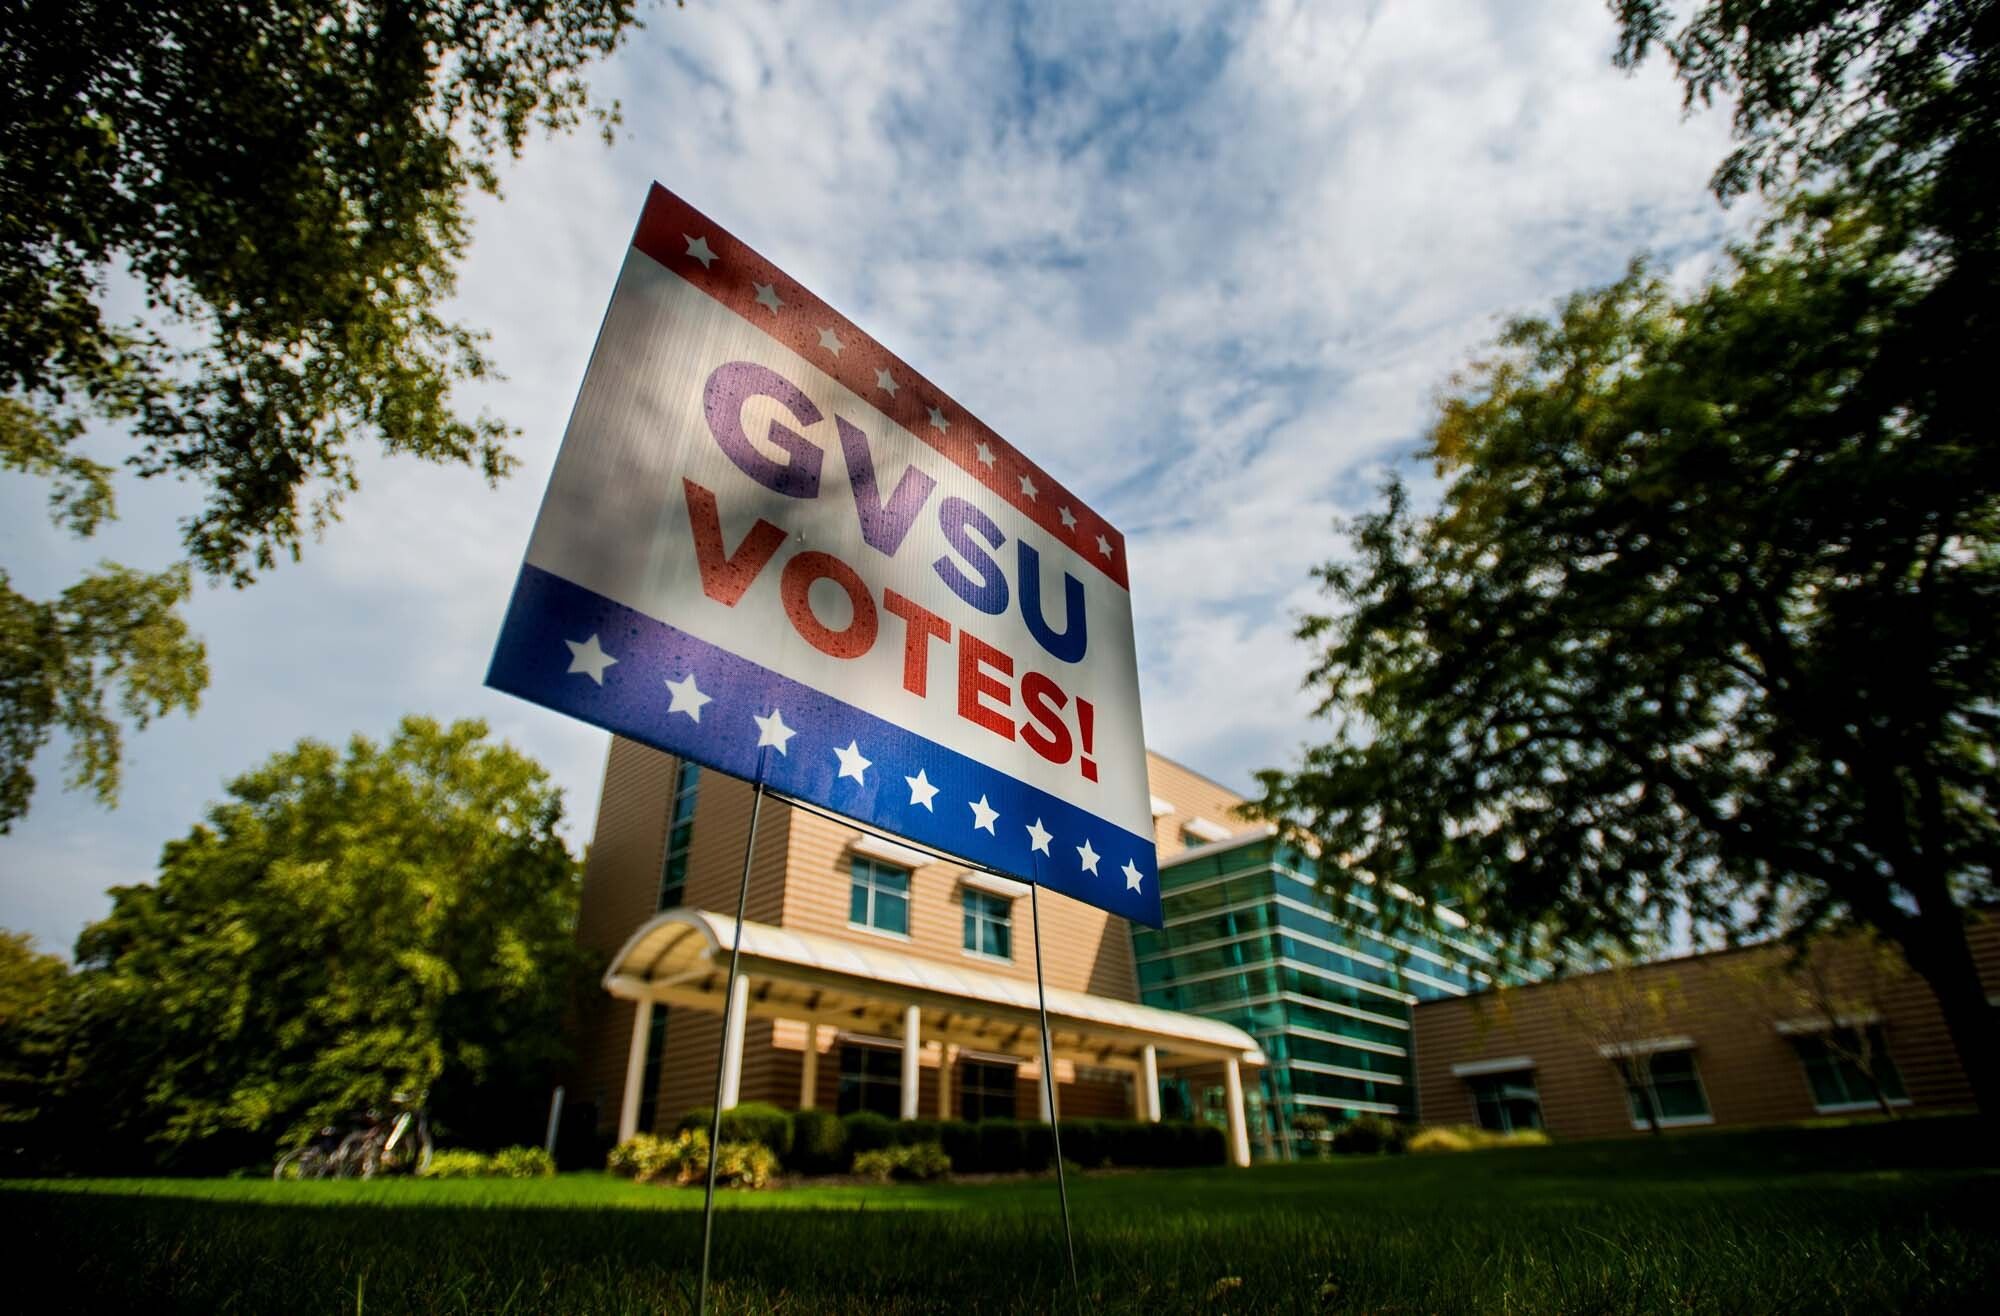 GVSU Votes sign outside